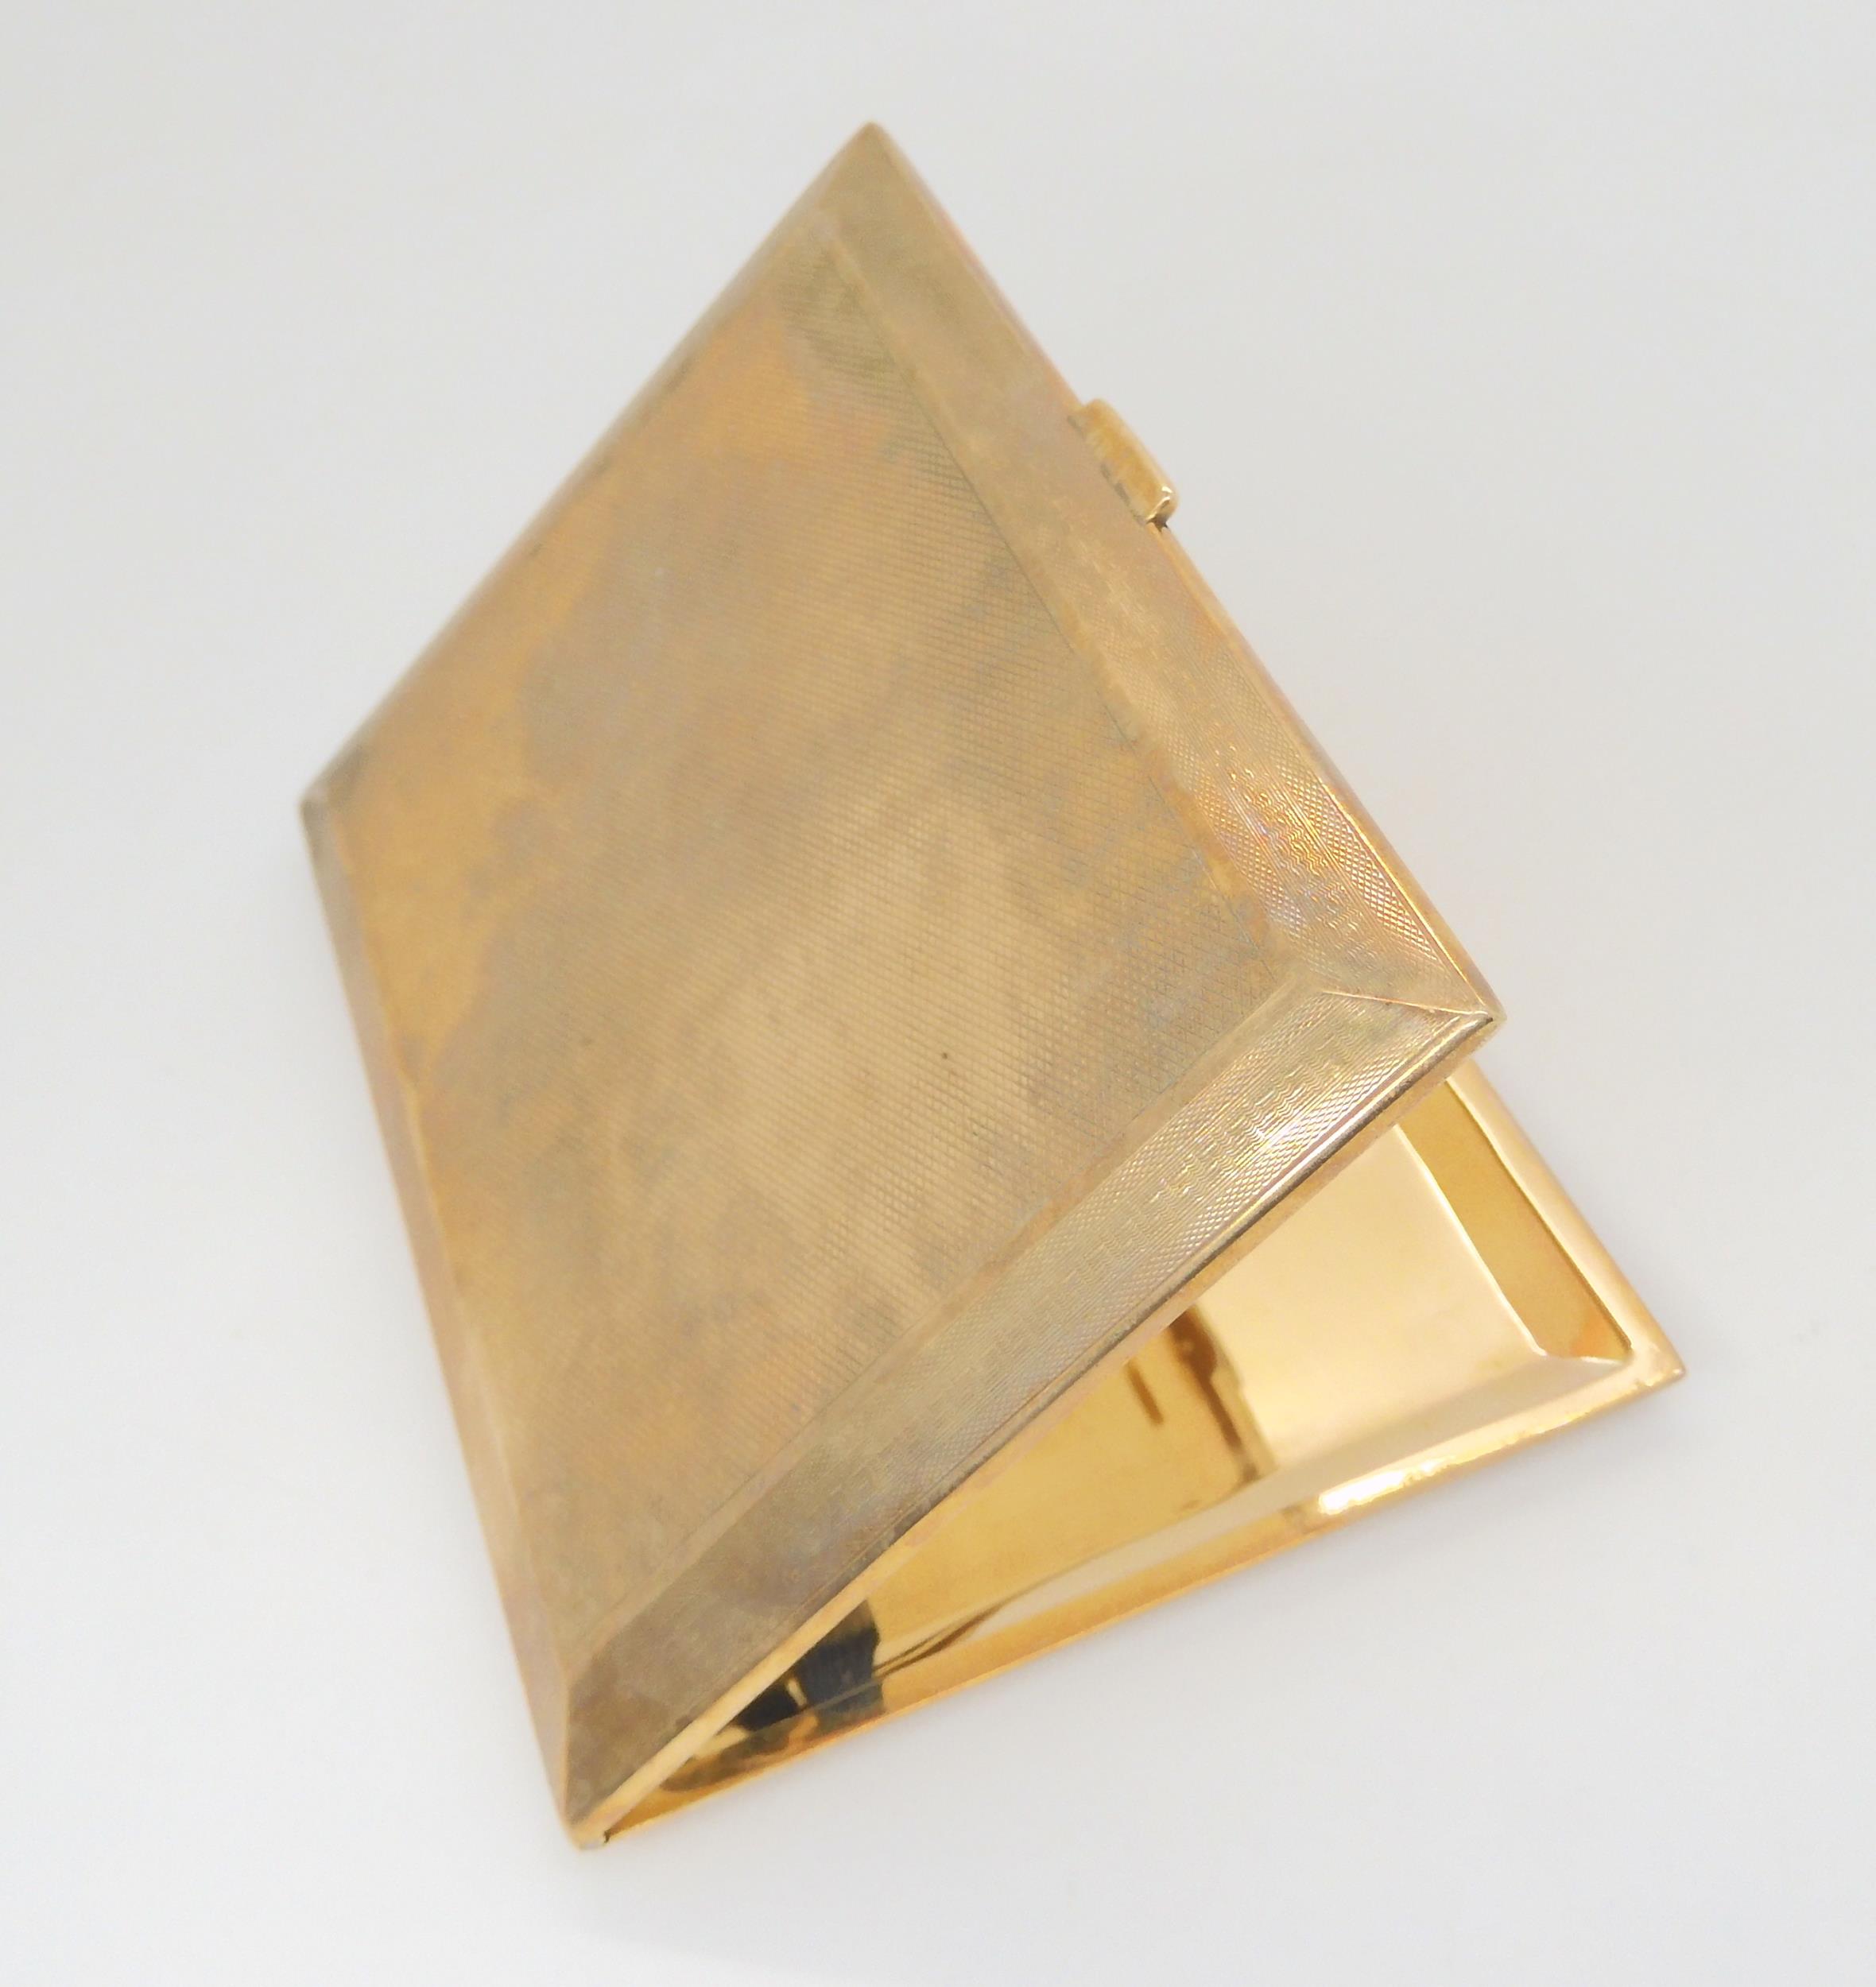 A 9ct gold cigarette case, hallmarked Birmingham 1927, made by William Neale & Son, 10.5cm x 8.